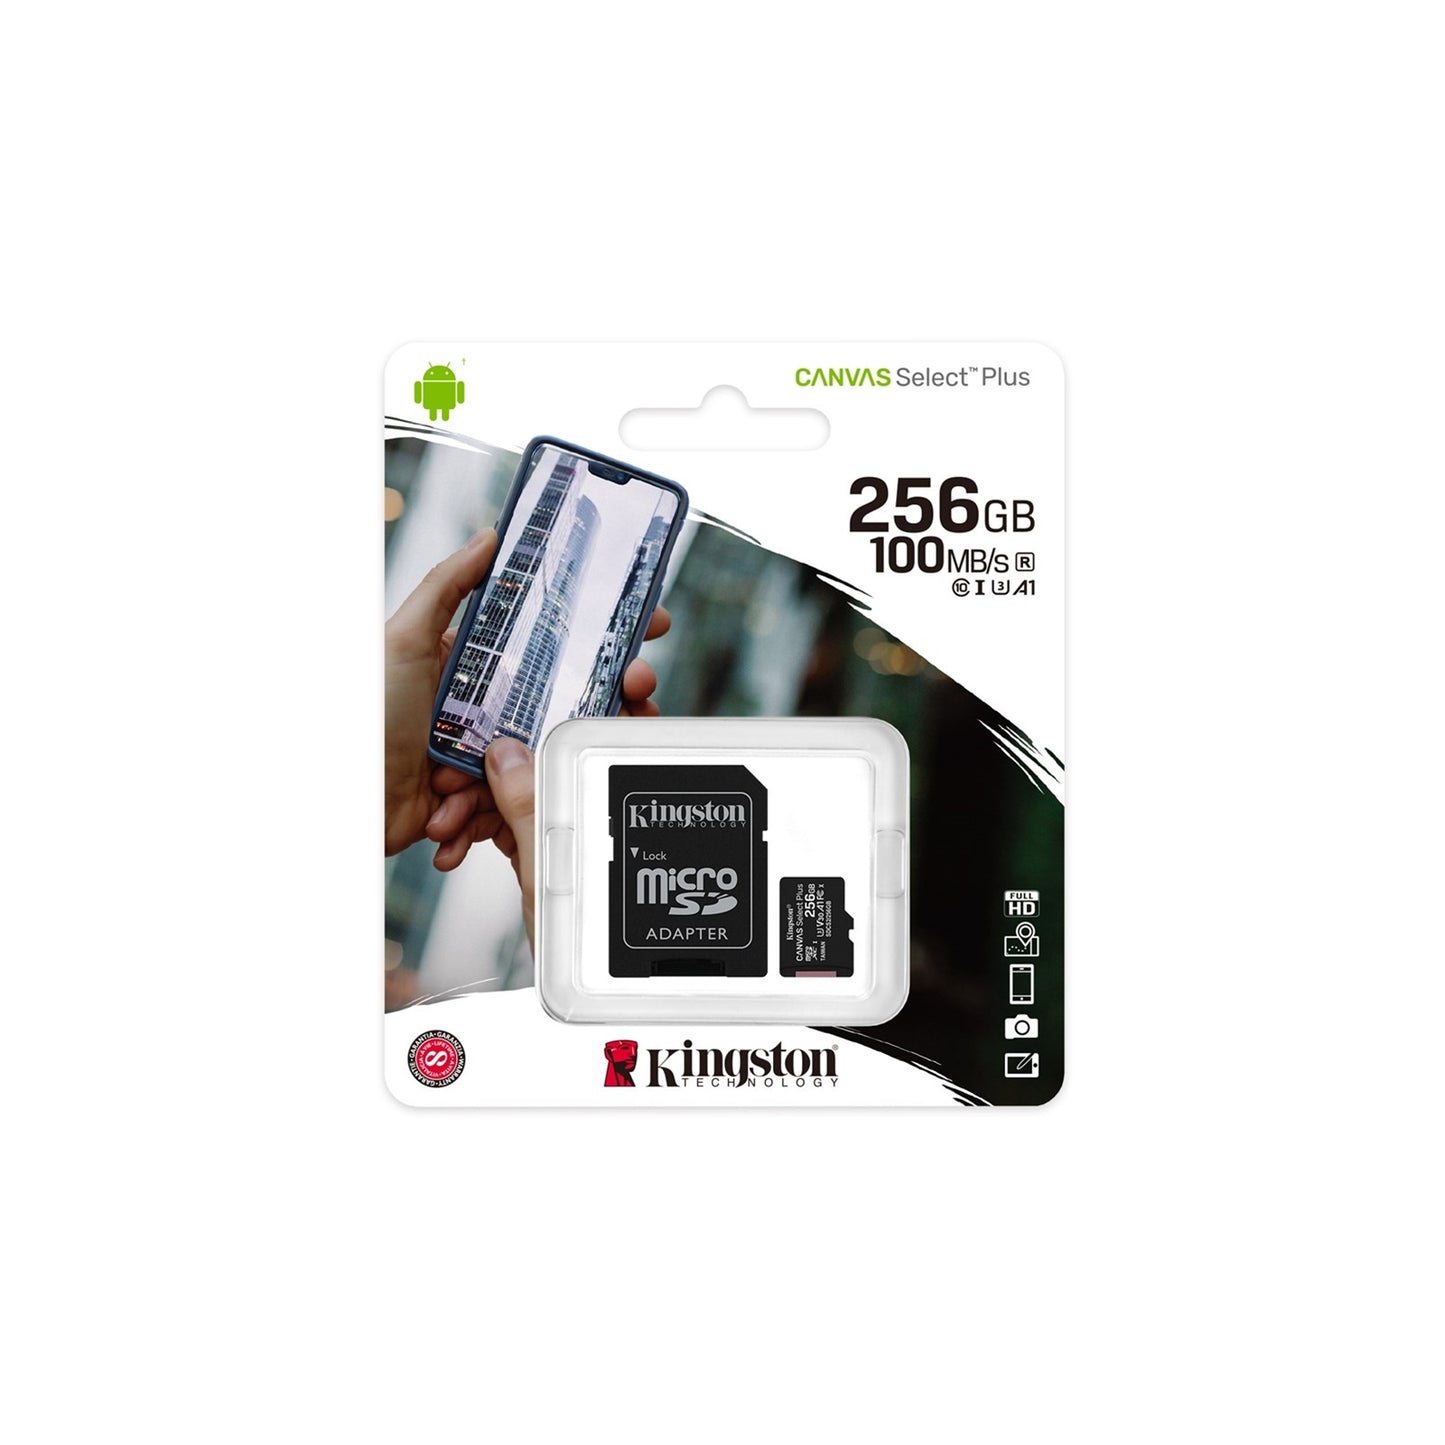 Kingston - Canvas Select Plus - MicroSD Class 10 Memory Card & SD Adapter - 256GB